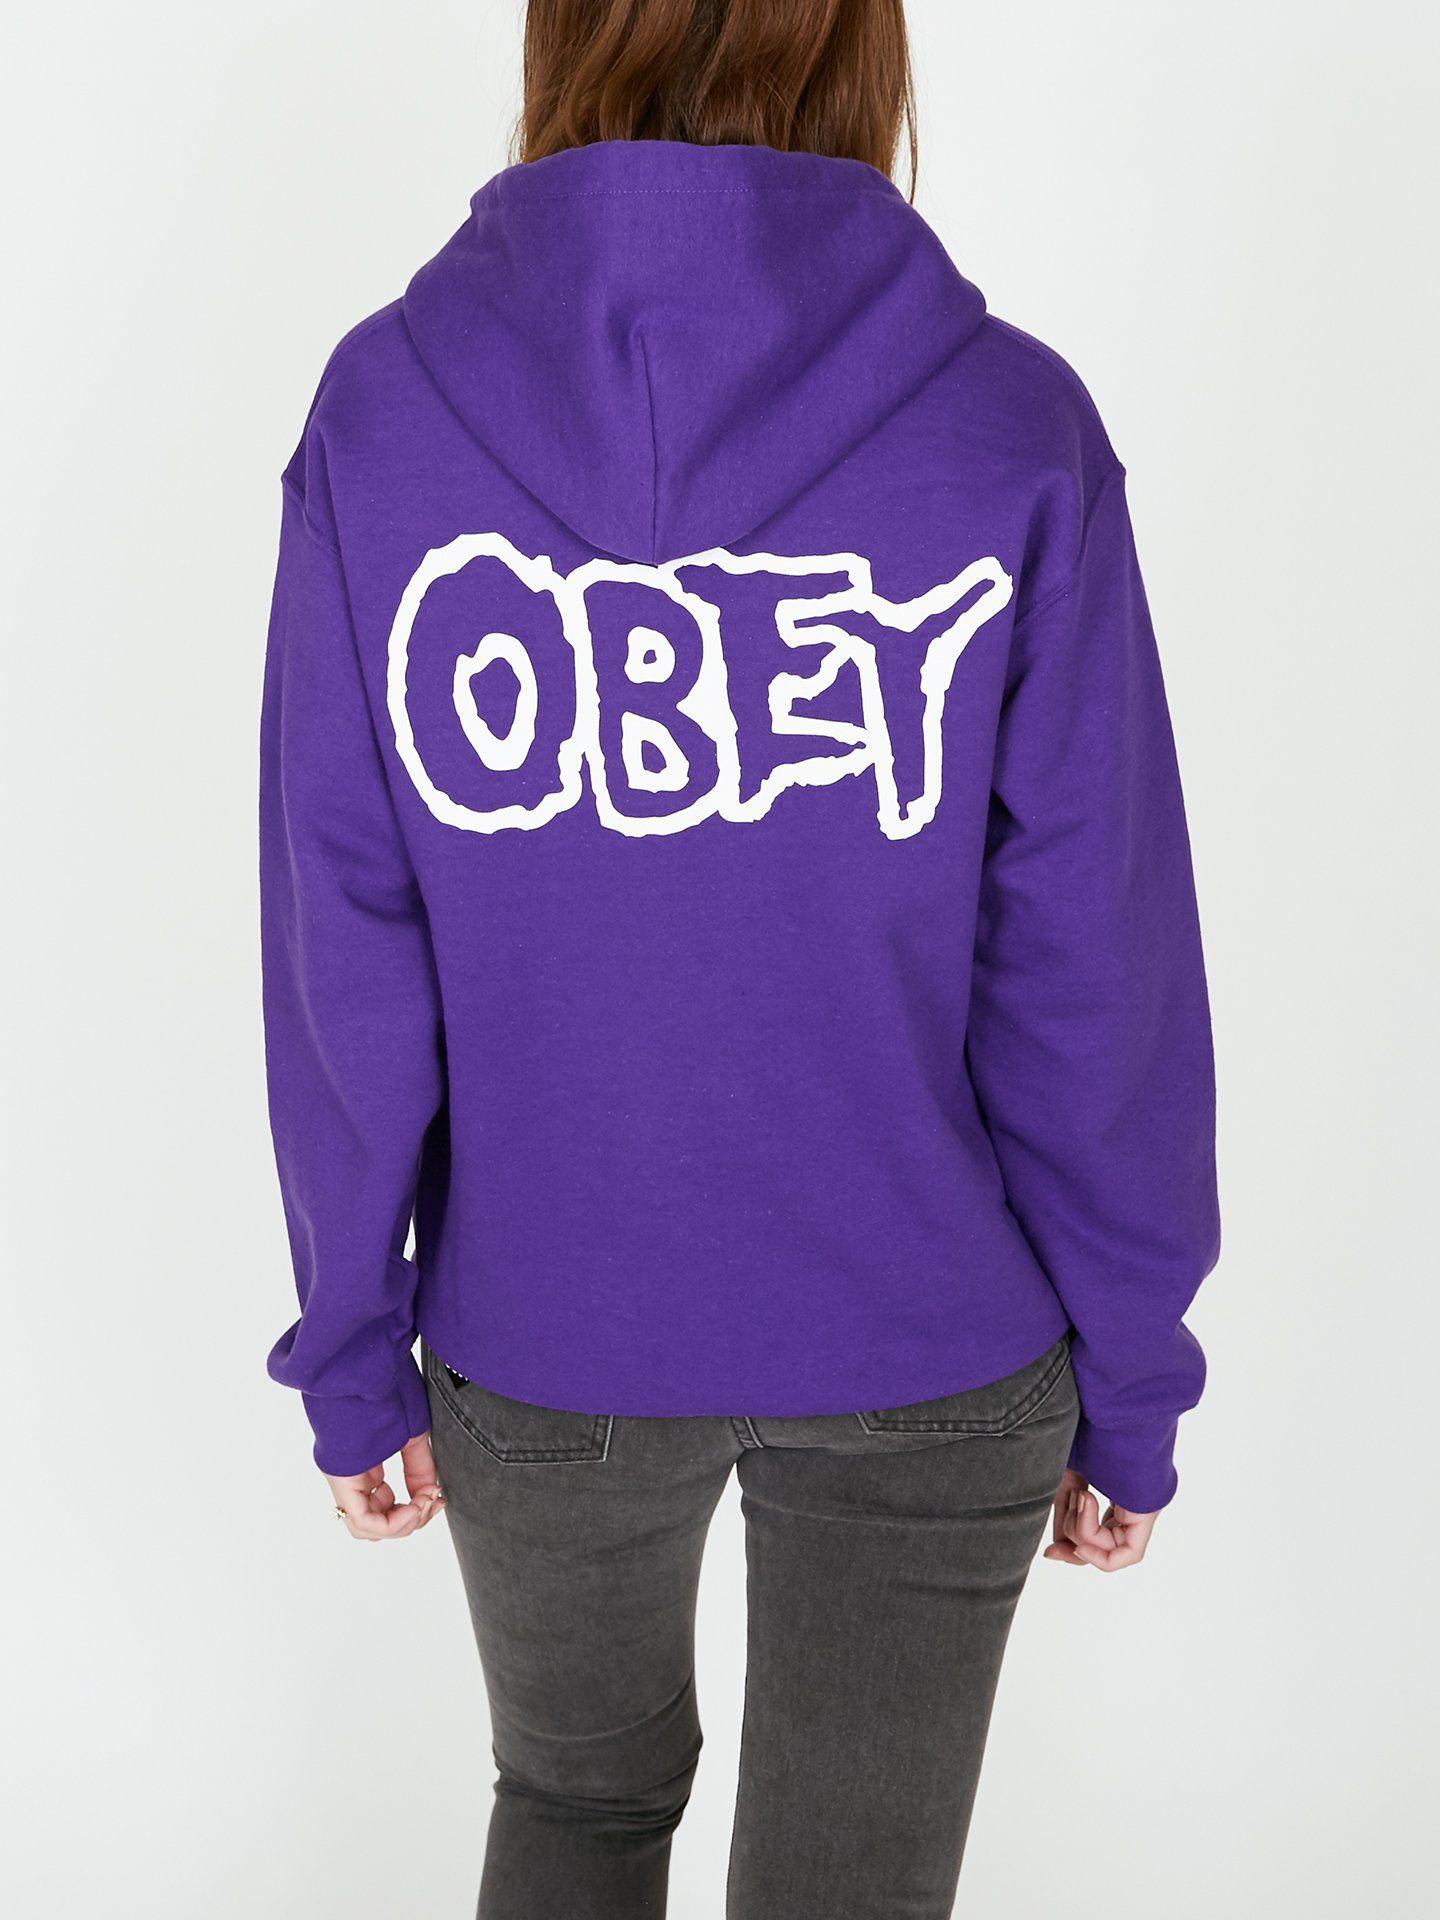 OBEY Clothing Old Logo - OBEY x Misfits Fiend Skulls Old School Hoodie